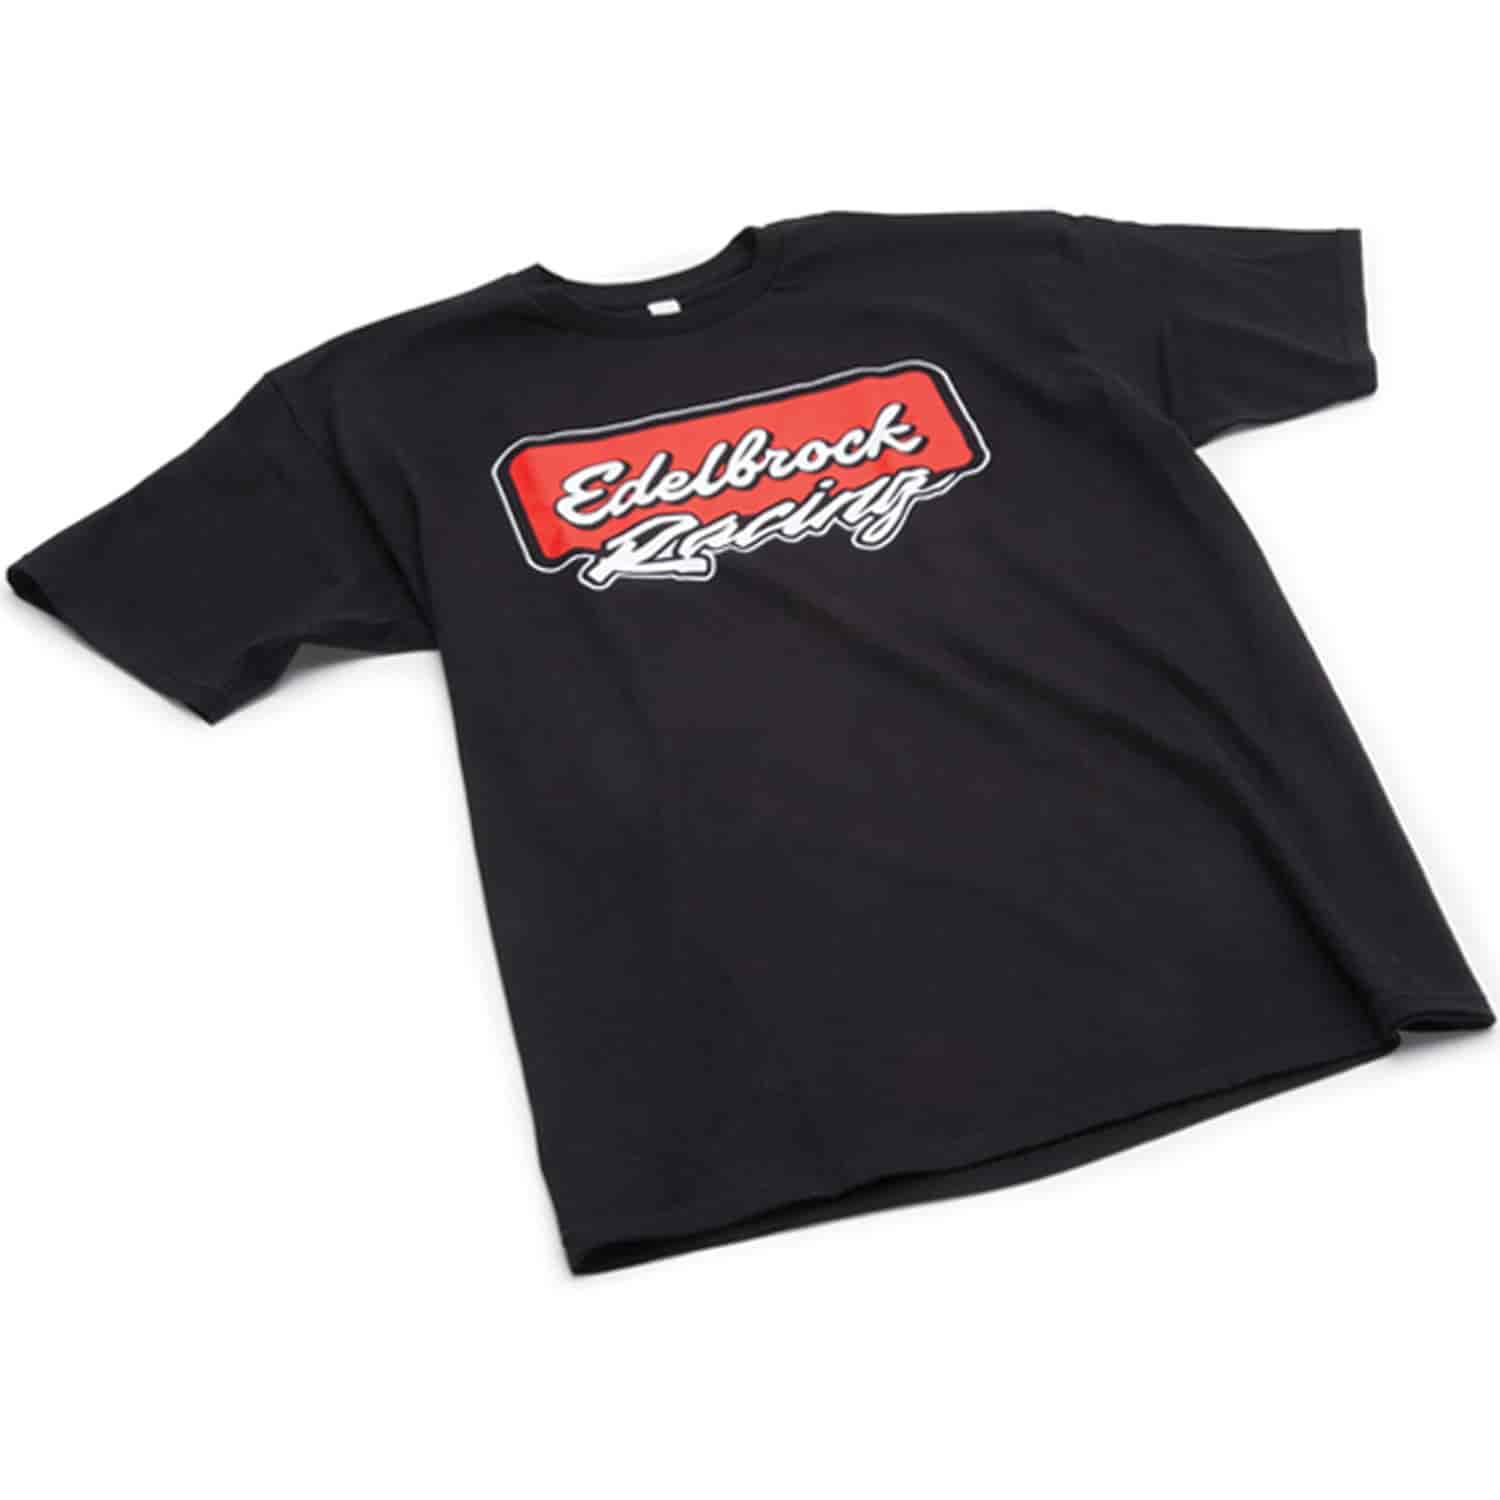 Edelbrock Racing Men's T-Shirt